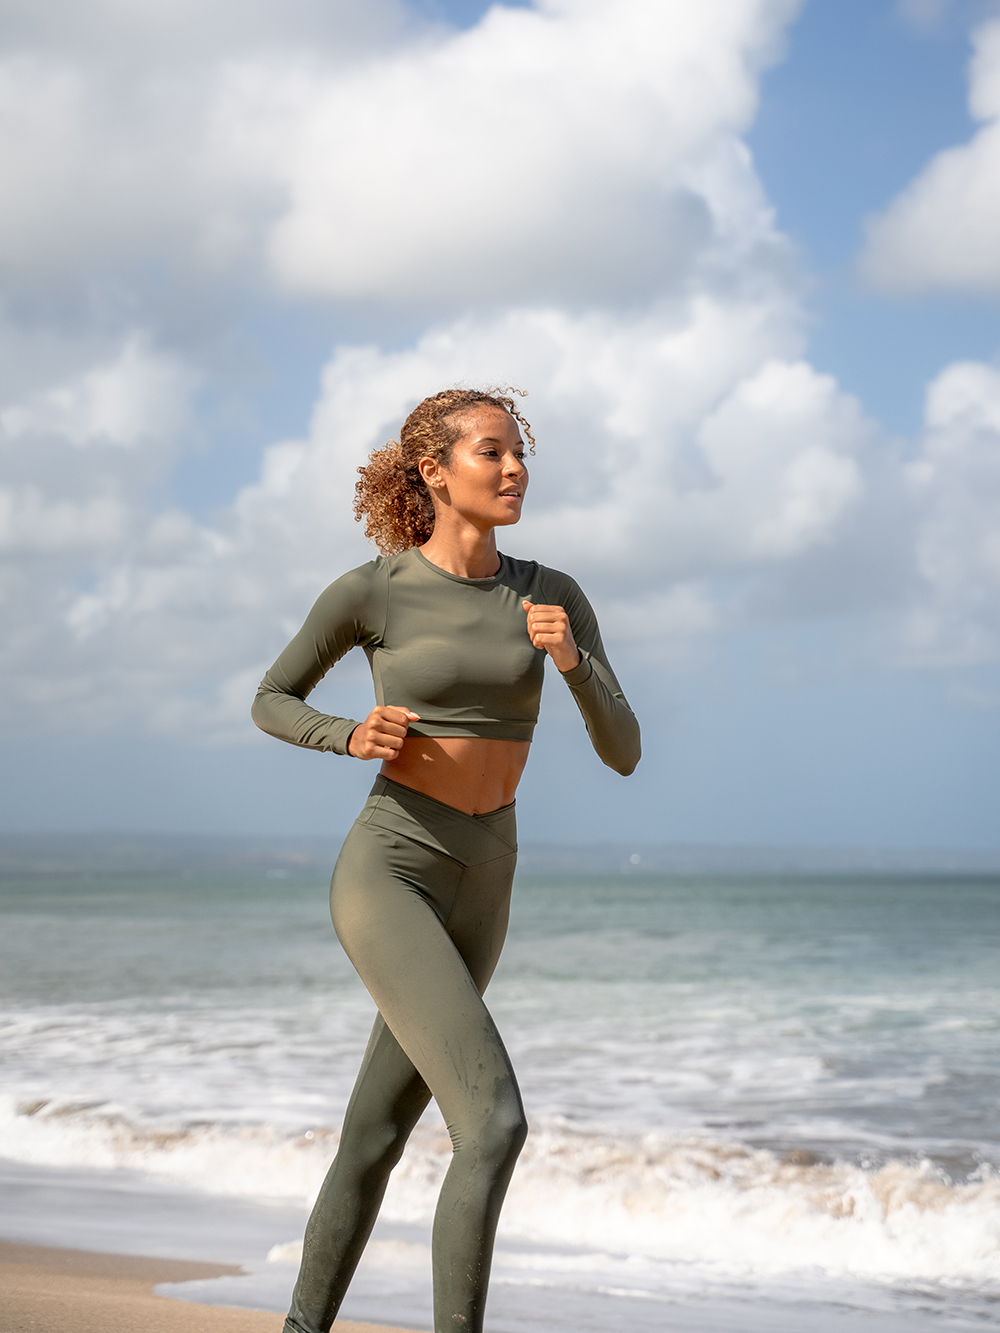 Bestisun Long Sleeve Yoga Workout Tops Lightweight Thumbhole Shirts Athletic Wear for Women 